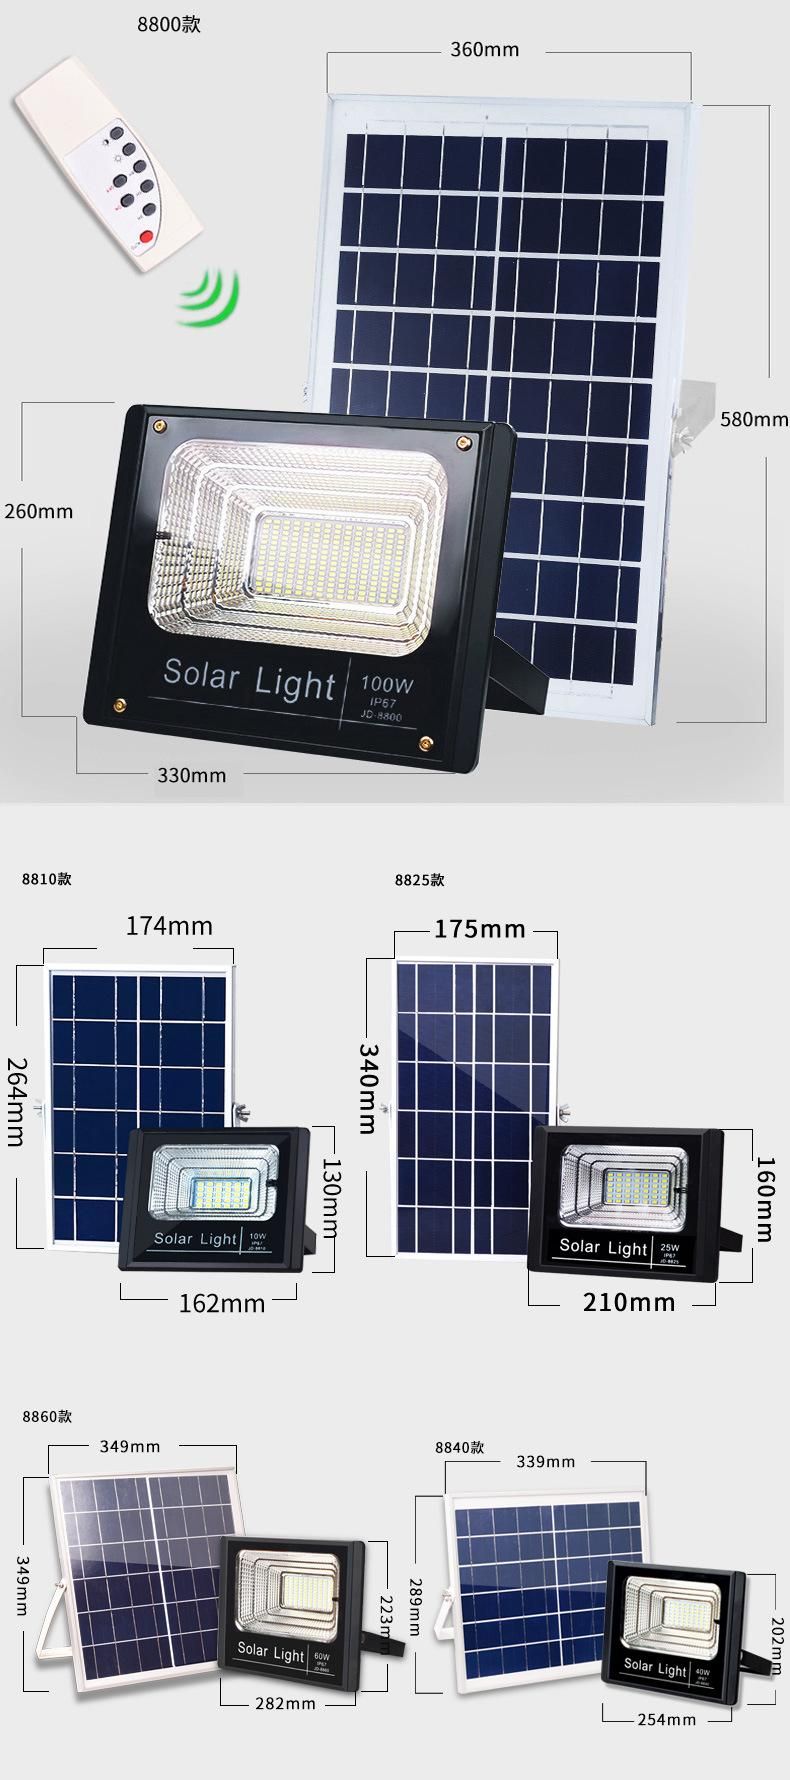 Solar Supply System Lights 25W 40W 100W IP67 Garden Yard Light off-Grid